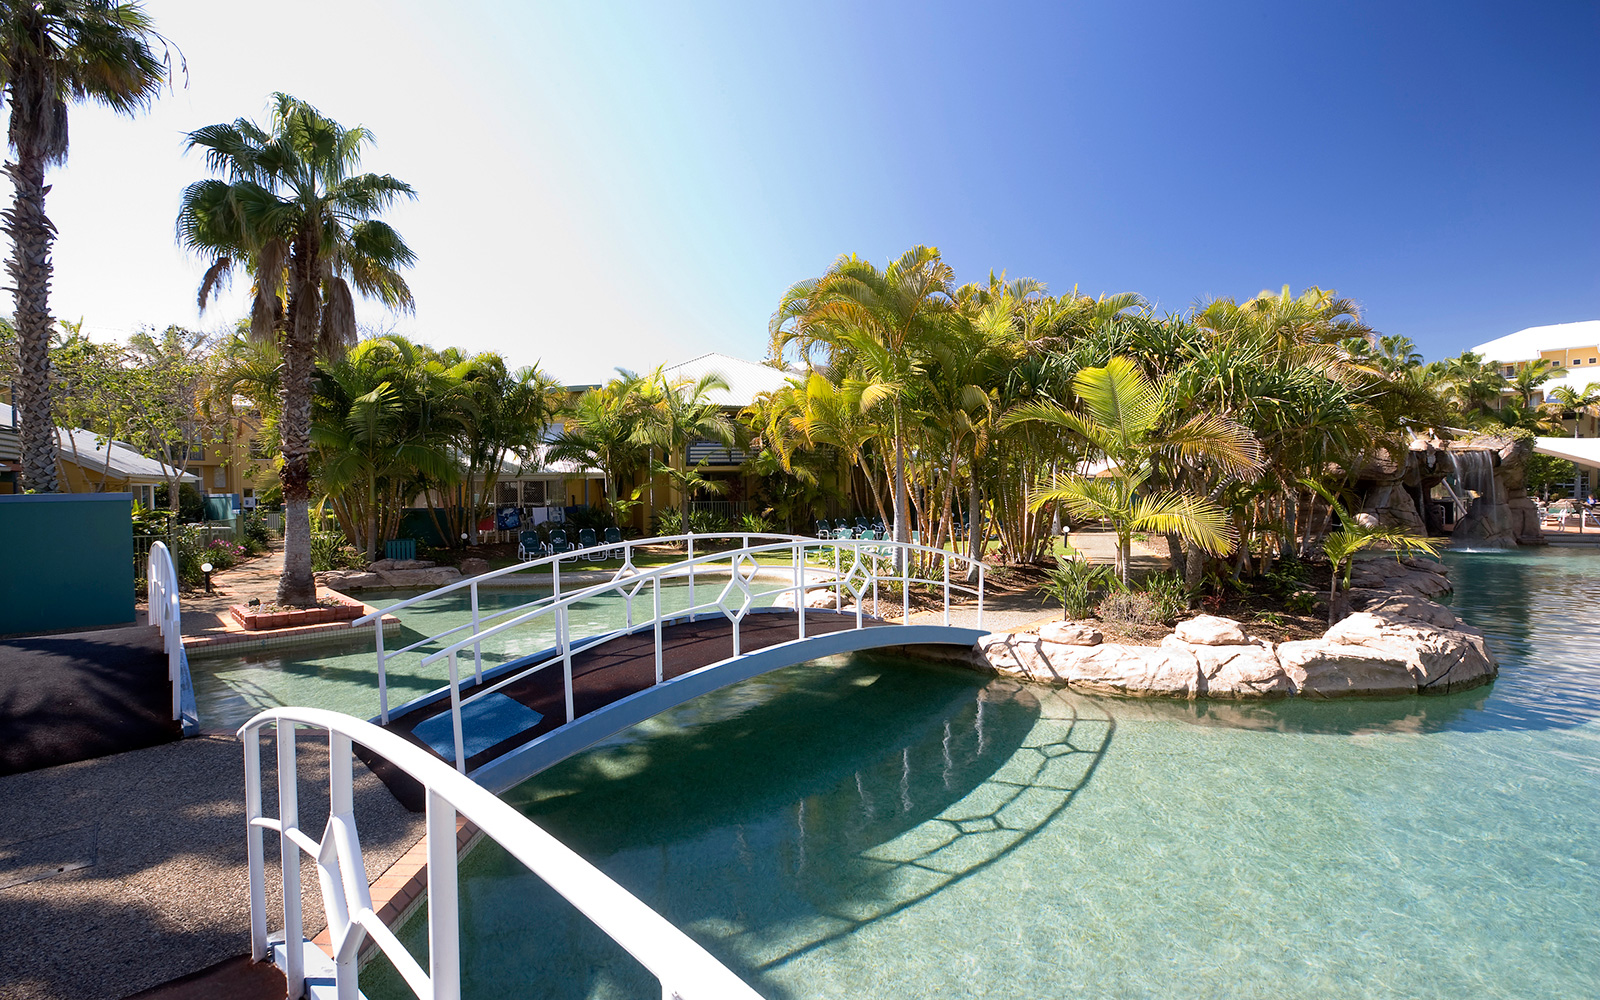 Family accommodation on the Gold Coast